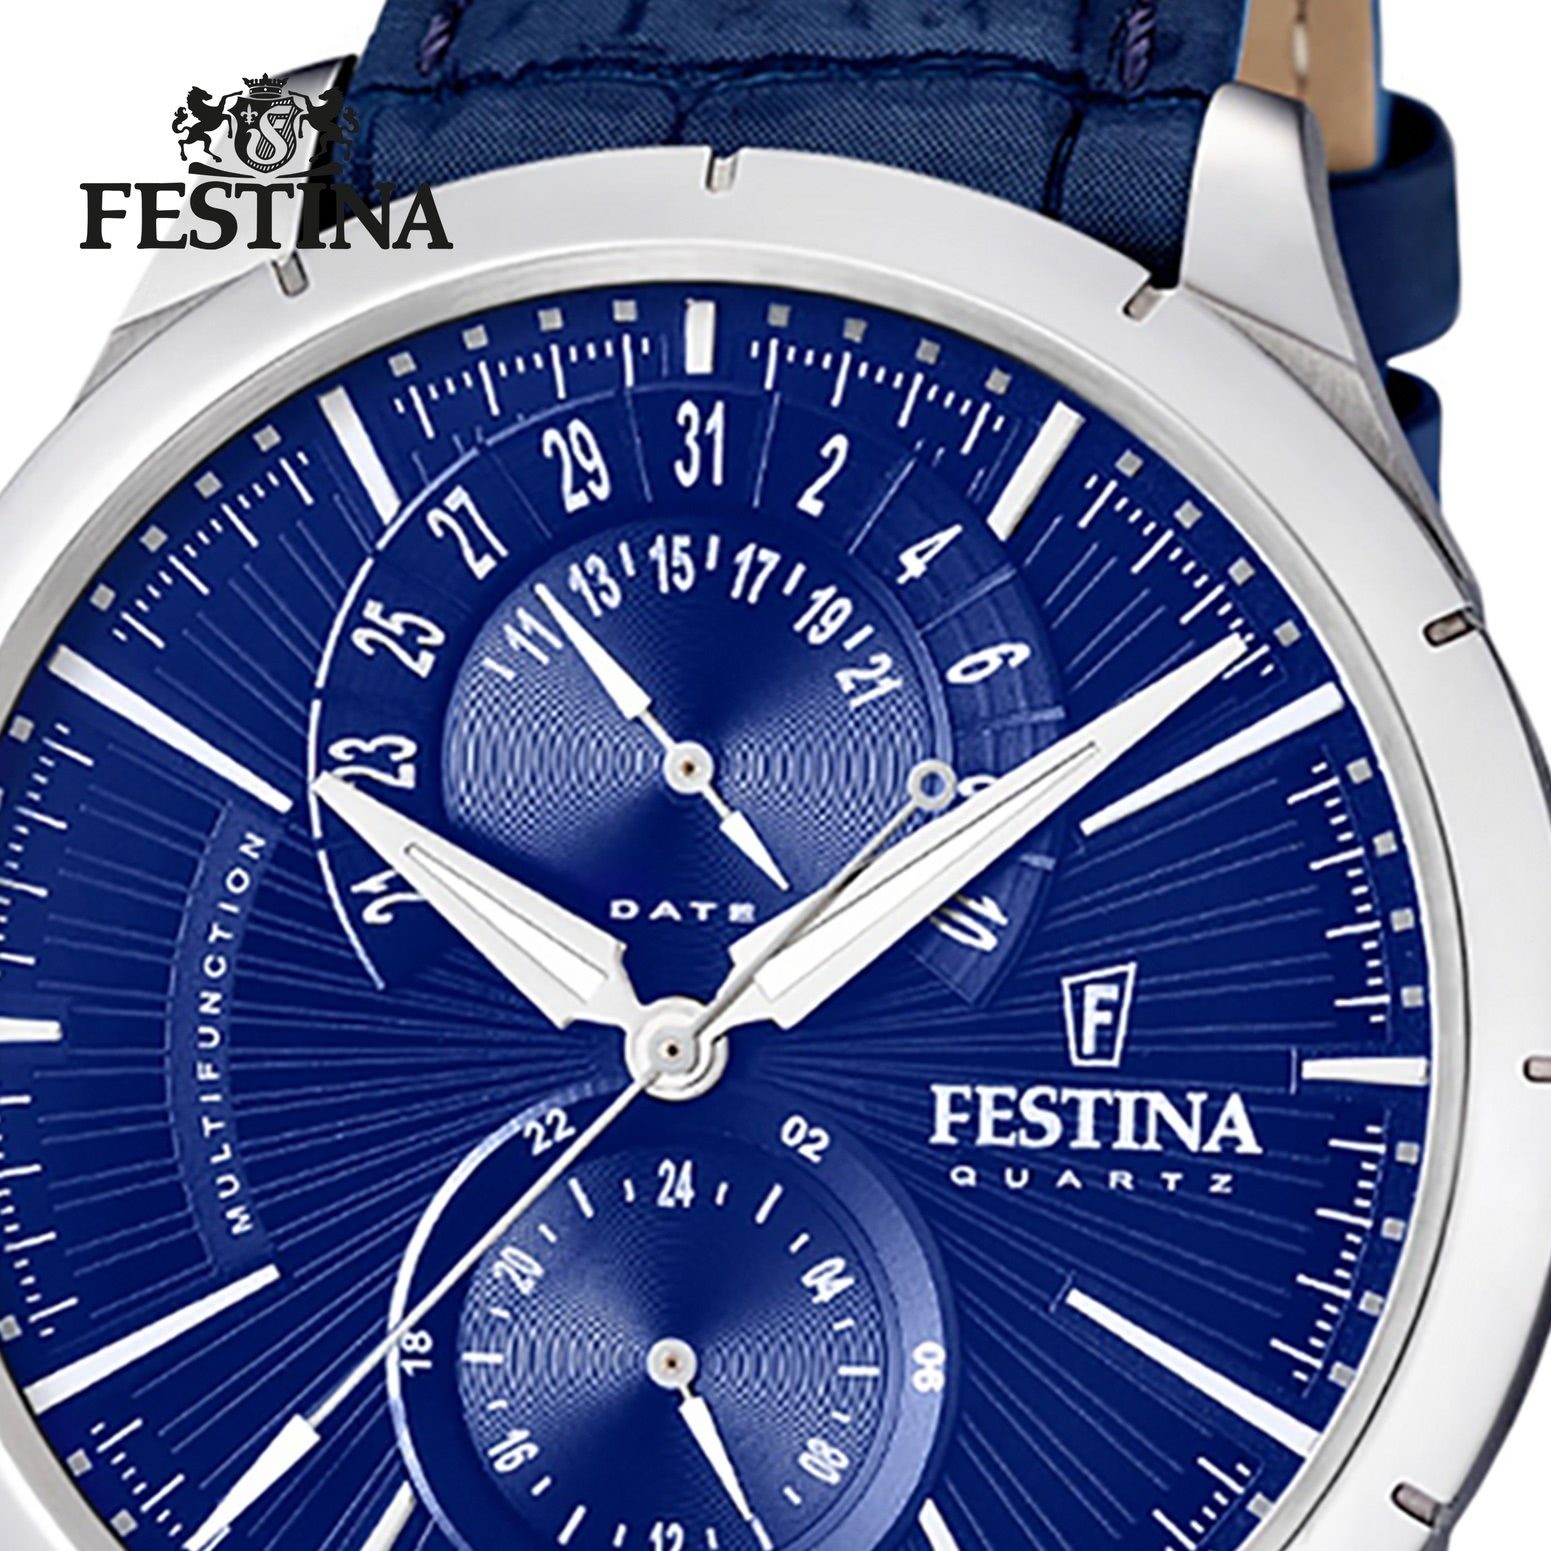 Festina Multifunktionsuhr UF16573/X Festina Herren rund, Lederarmband schwarz Elegant Armbanduhr blau F16573/X, Uhr Herren